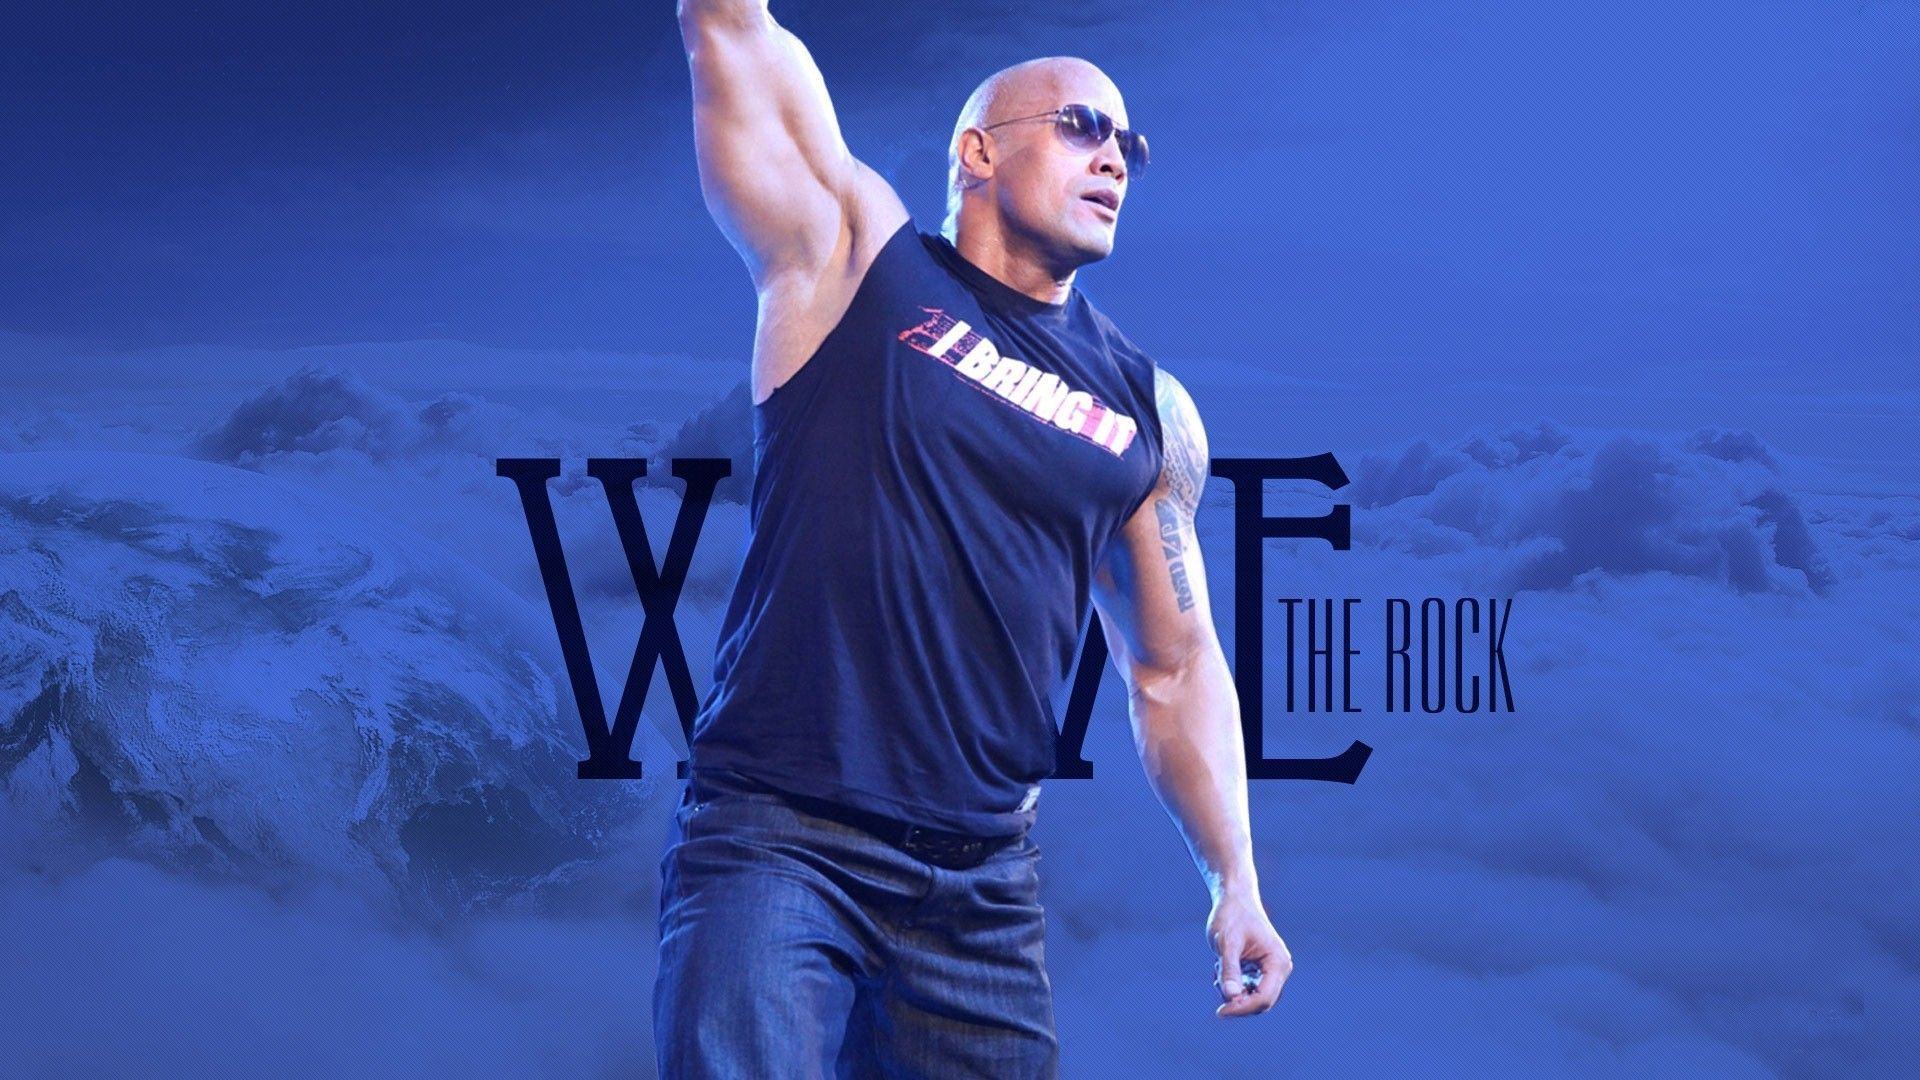 The Rock WWE Popular Wrestler HD Photo. HD Wallpaper, Image, Picture, Photo. Wwe the rock, The rock dwayne johnson, Dwayne johnson